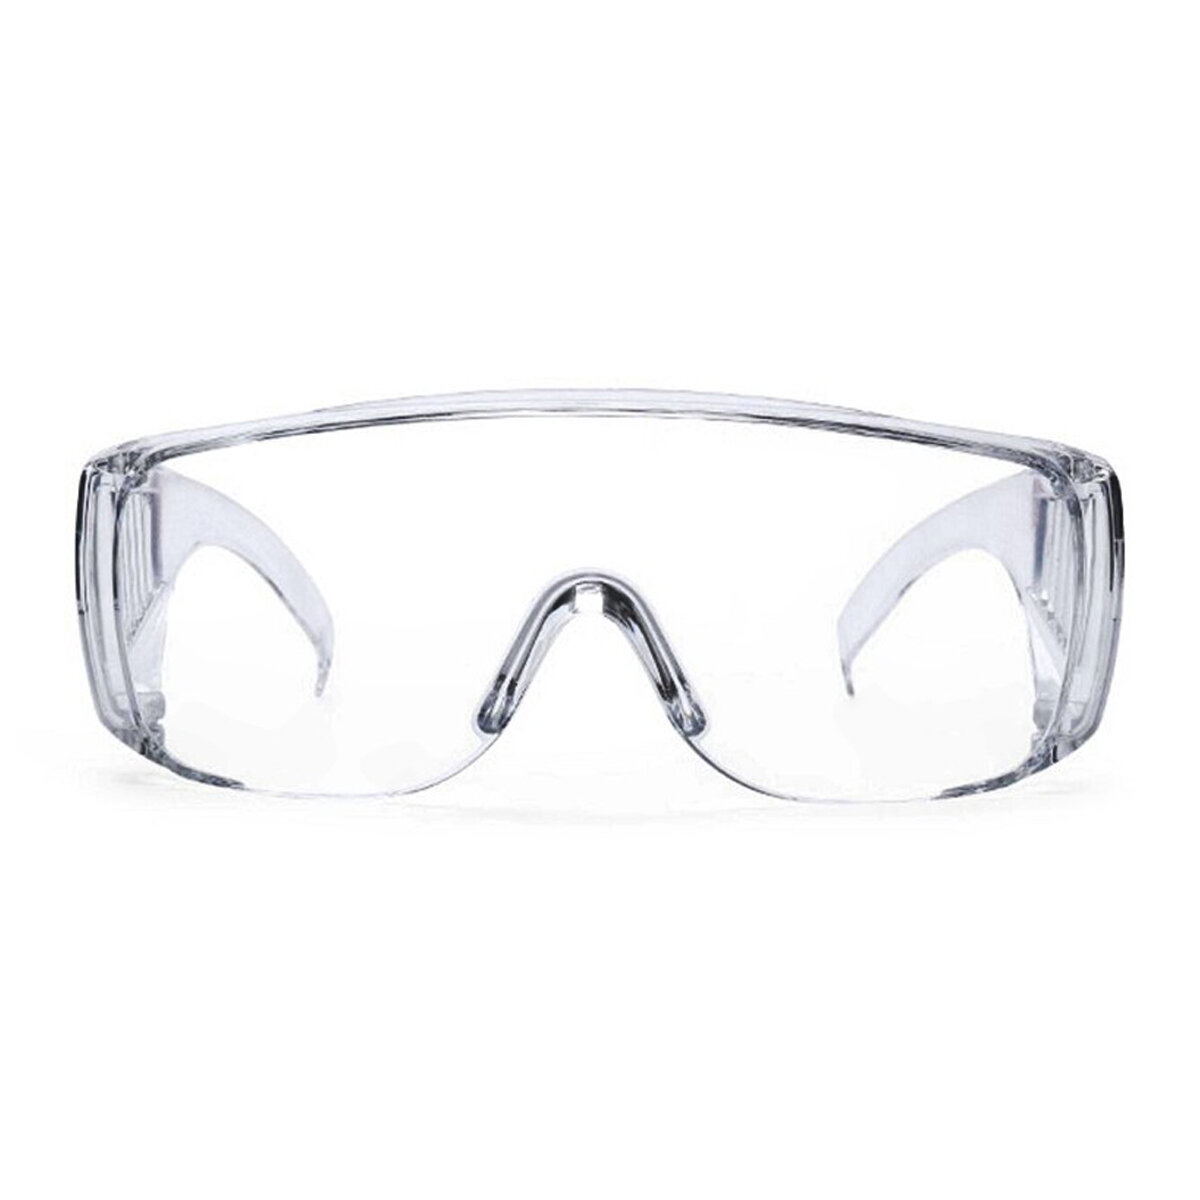 Transparent Eye Goggles Anti Fog Dust Splash-proof Glasses Work Protection Tool